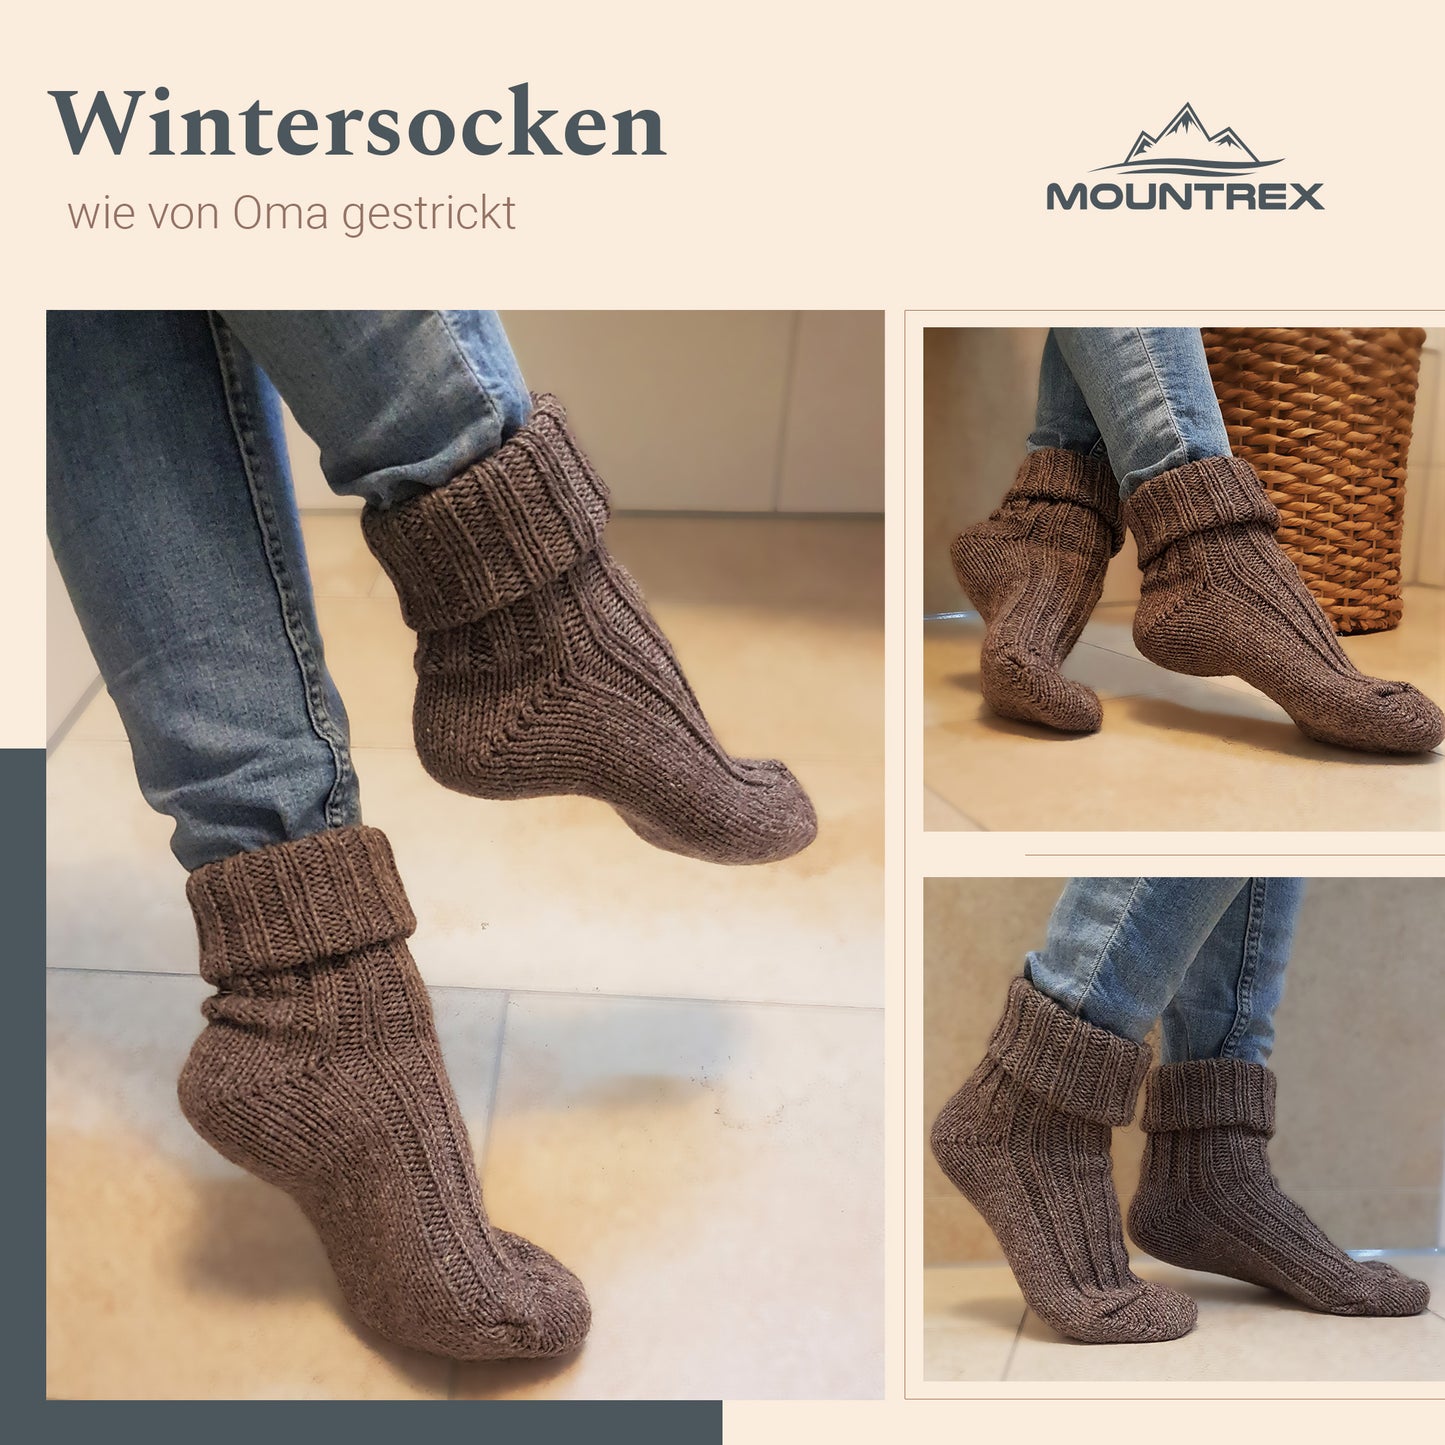 Alpaka Socken, Wollsocken (2 Paar) - Strick (Beige/Braun)